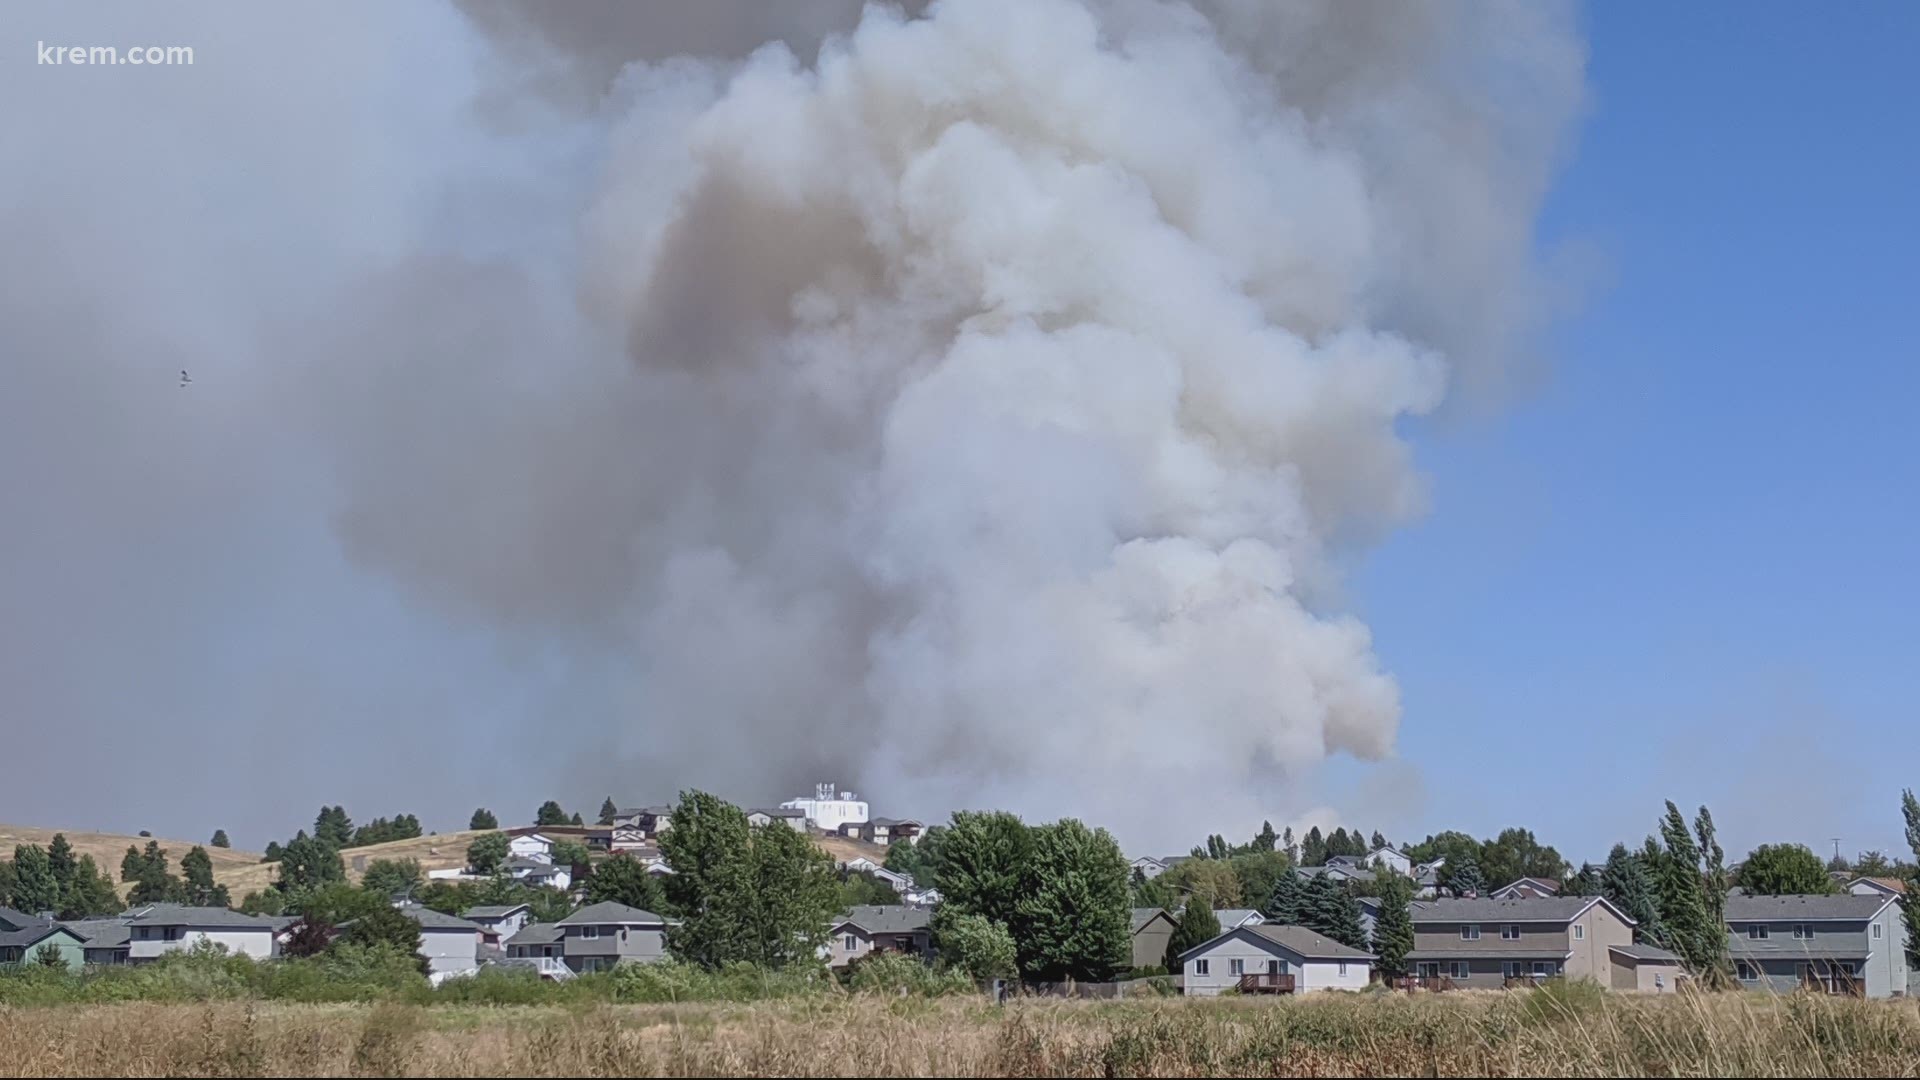 Bartholomew Fire in Medical Lake reaches 200 acres, 80 percent